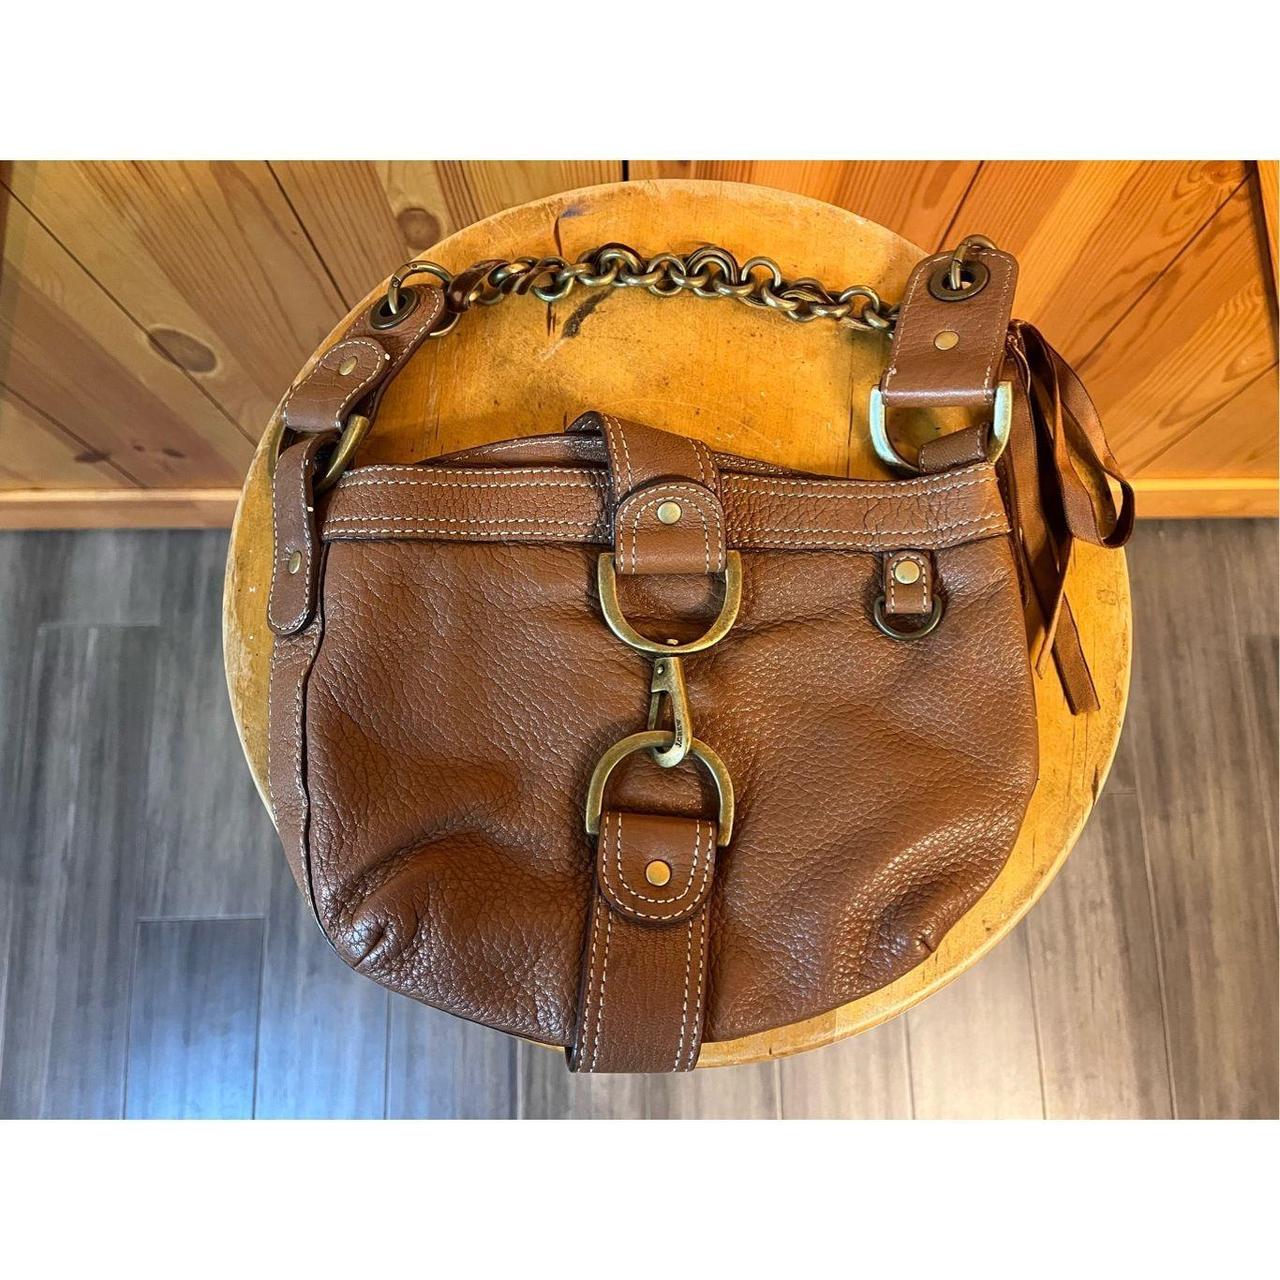 Paprika Leather Clutch | Leather Clutch Bag by KMM & Co.